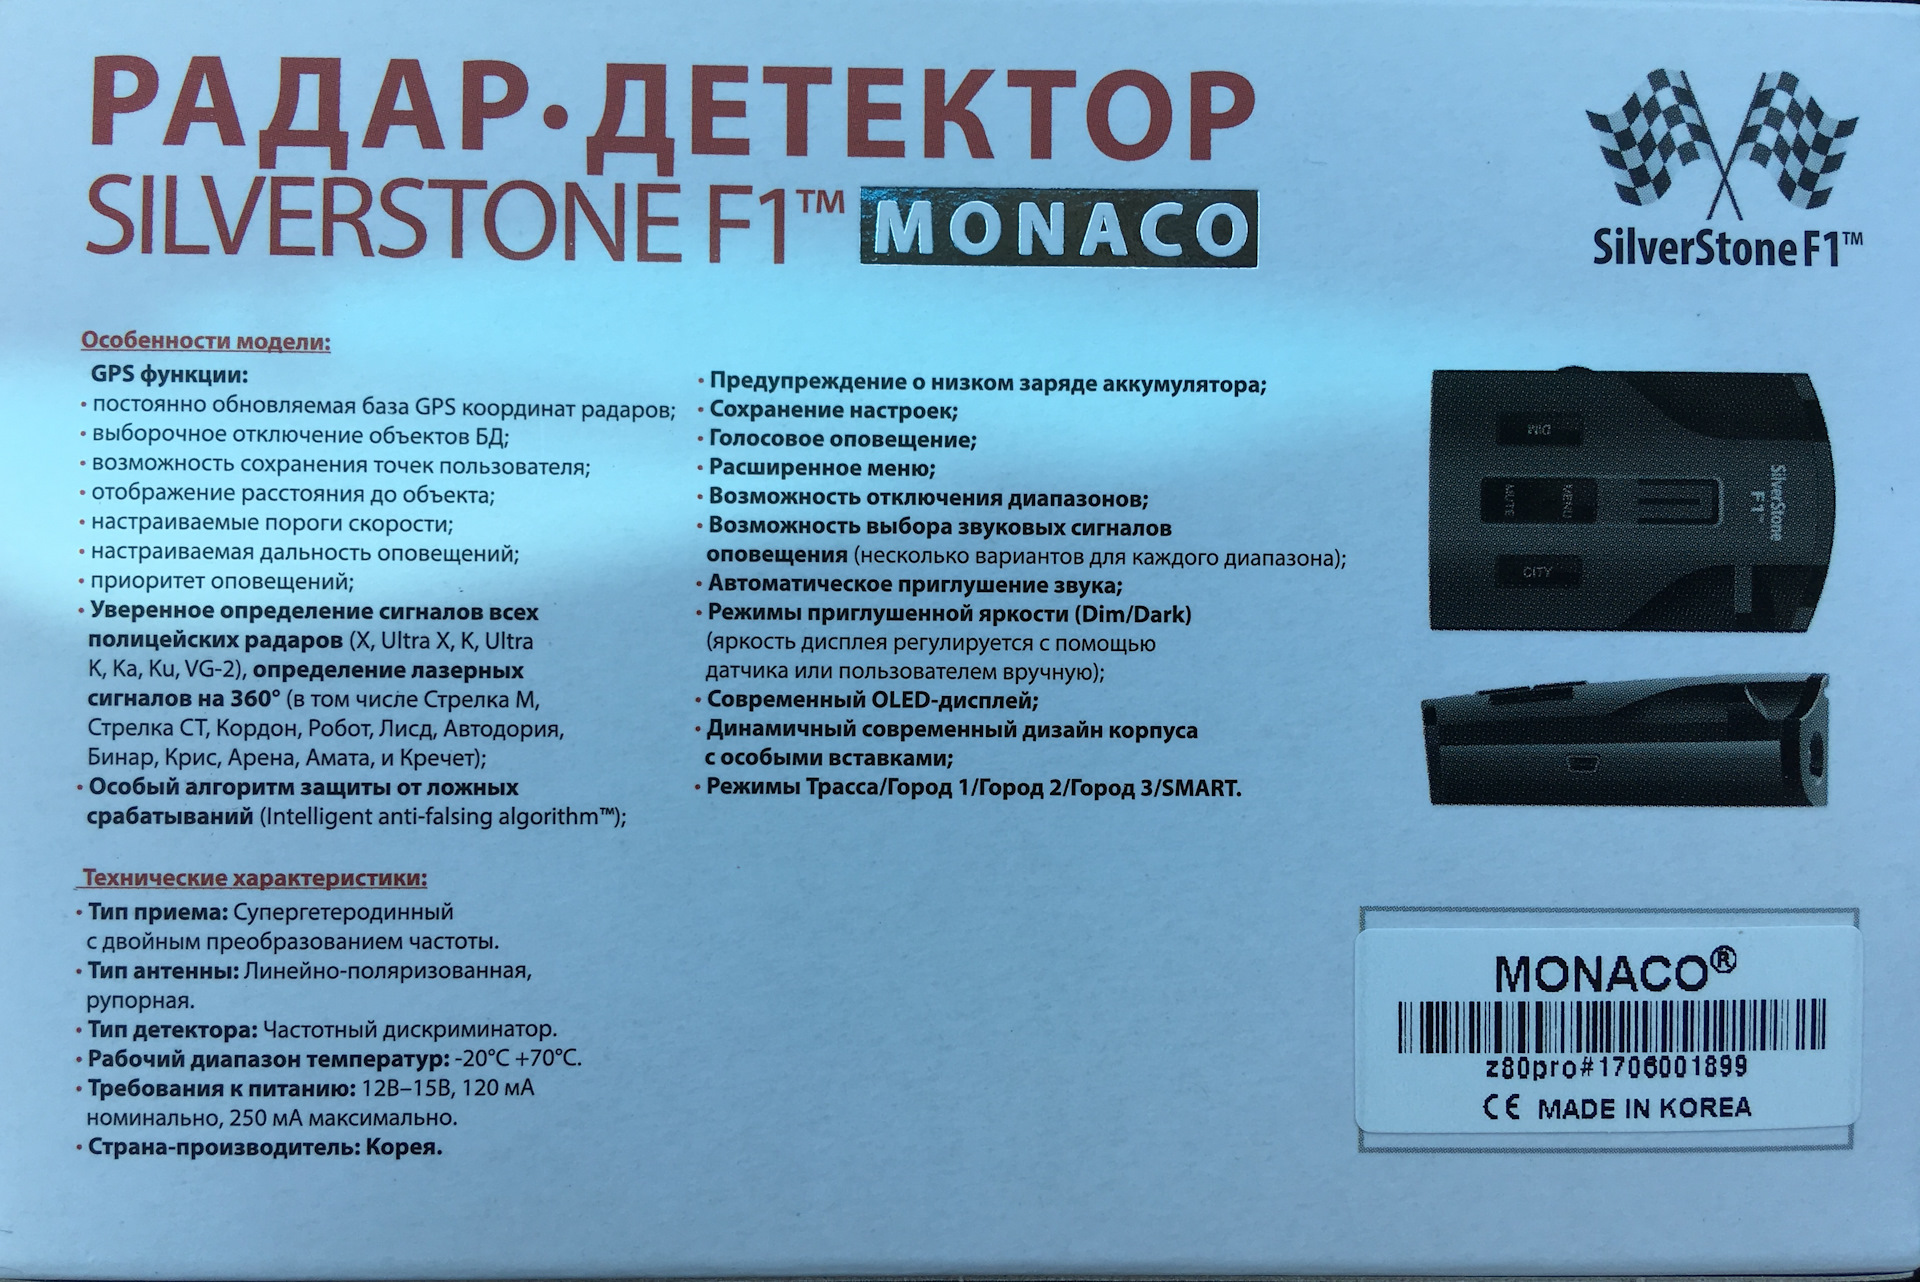 Сильверстоун ф1 сайт обновления. Silverstone f1 Monaco Pro. Радар детектор с экраном скорости. Радар Silverstone. Антирадар 2006 года.